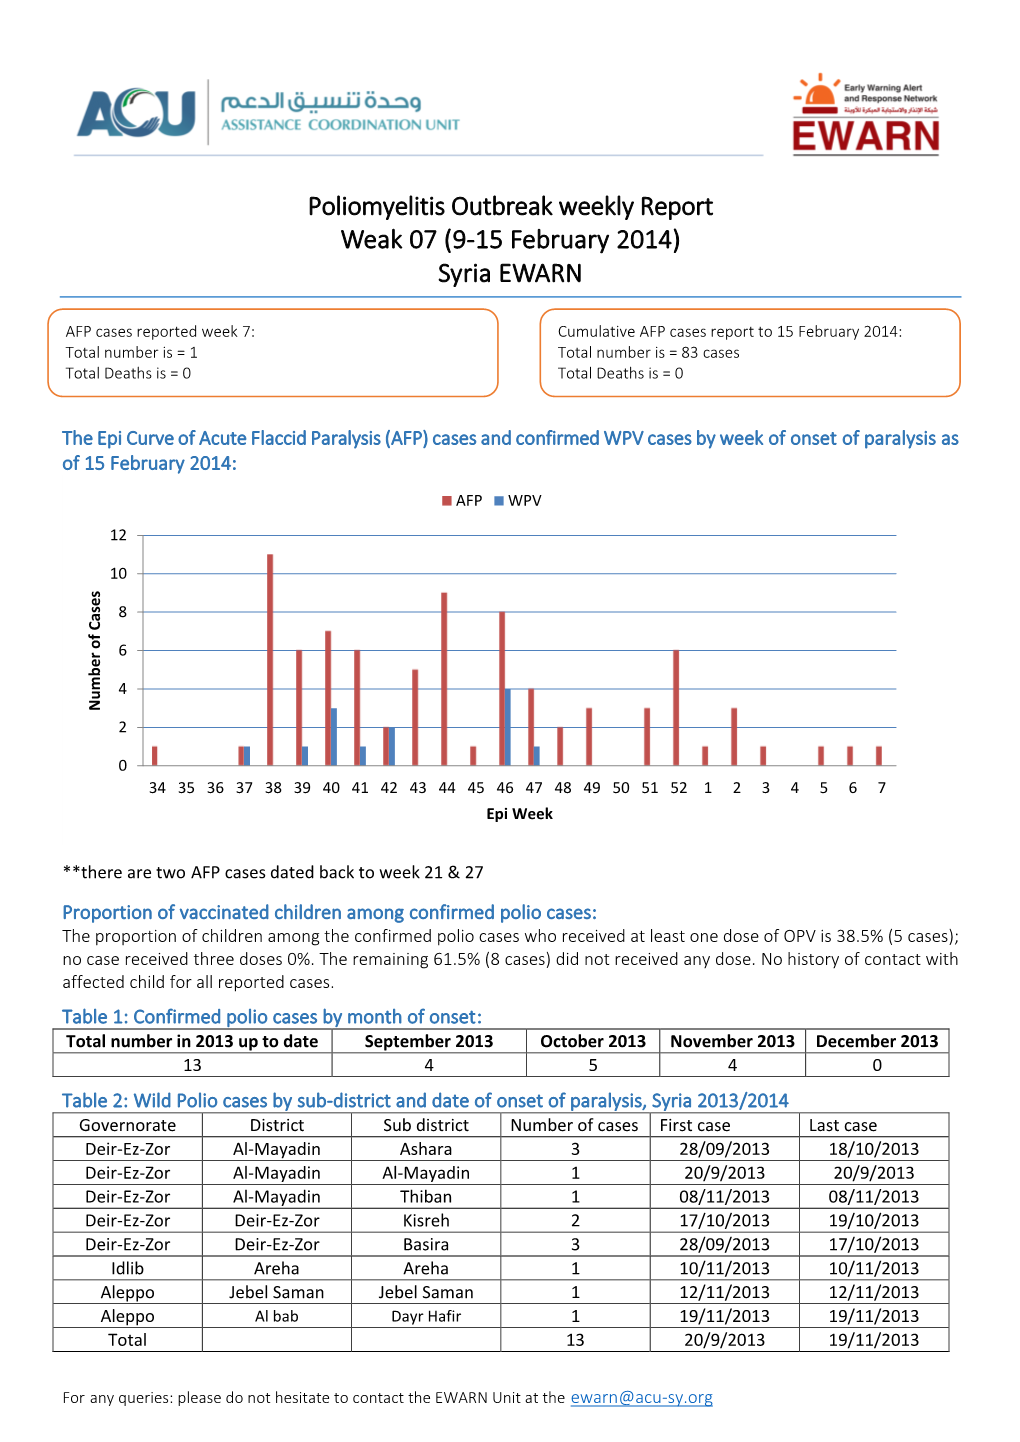 Poliomyelitis Outbreak Weekly Report Weak 07 (9-51 February 2054) Syria EWARN